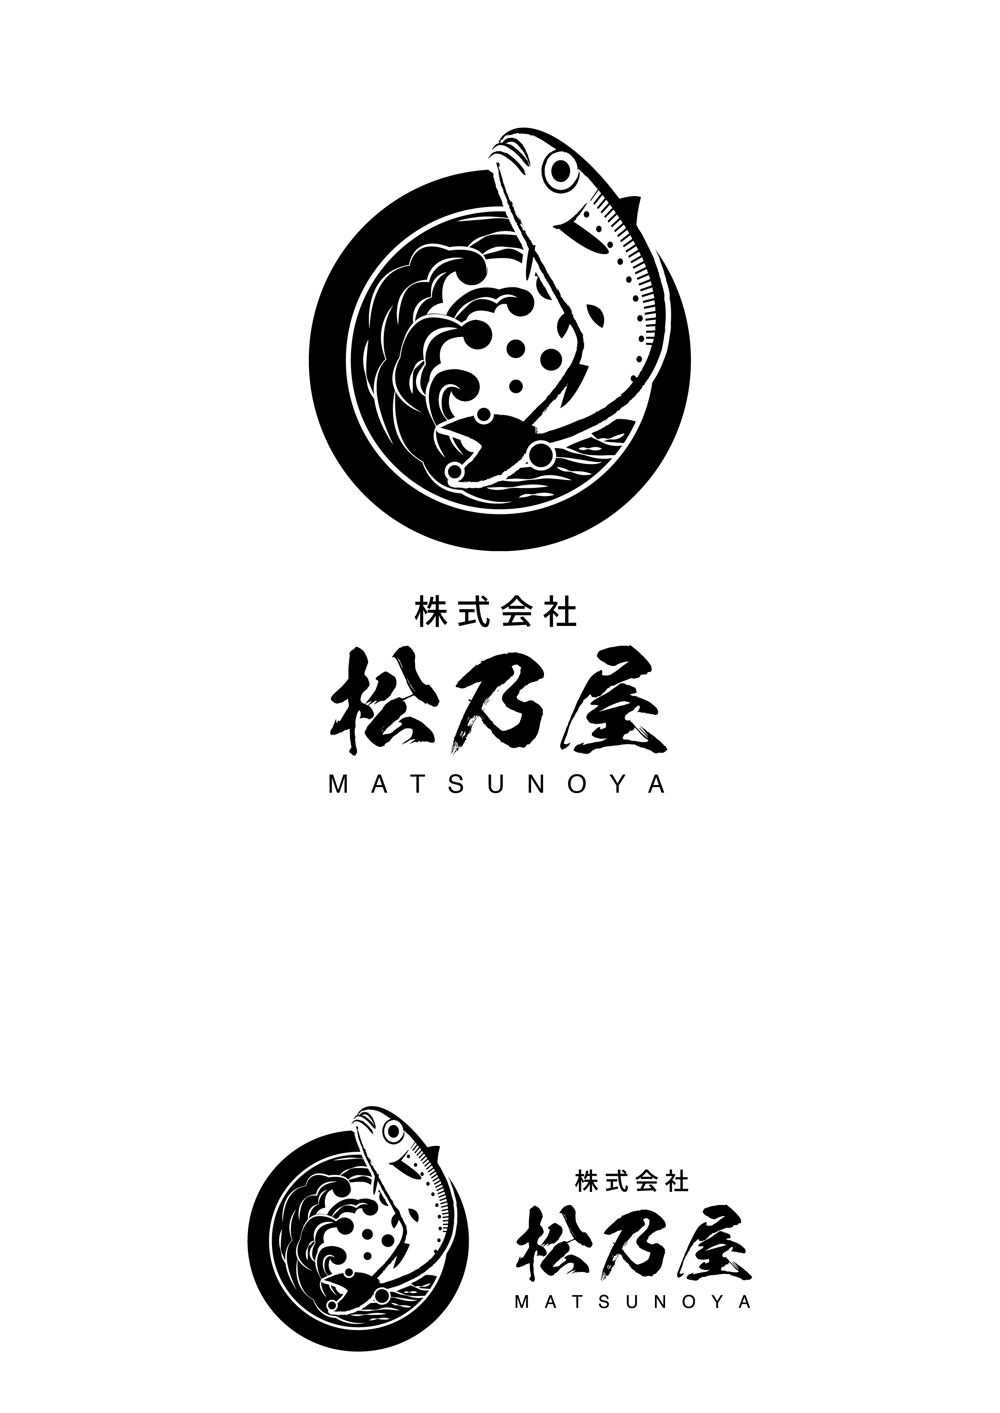 MATSUNOYA_01.jpg